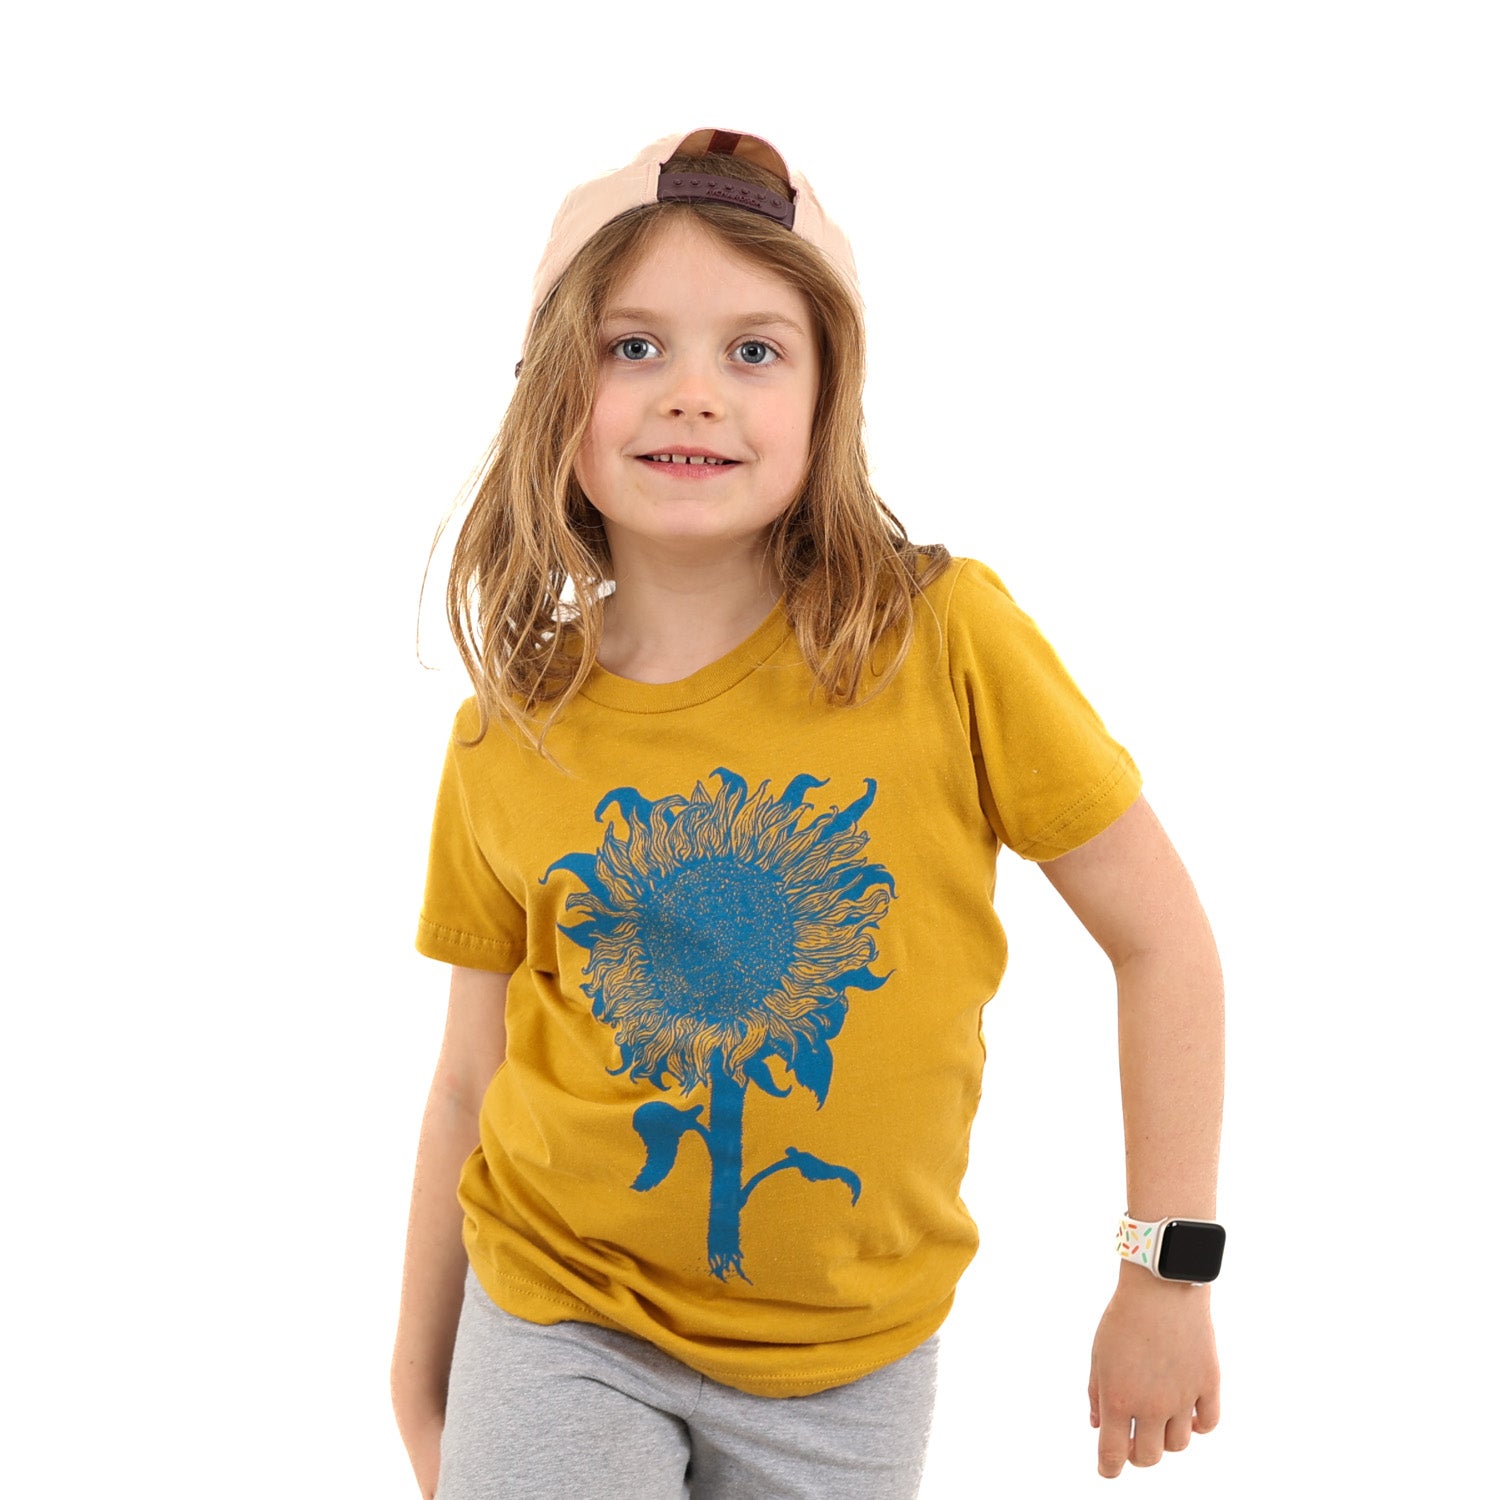 Little girl wearing a mustard colored t-shirt with light blue print of an intricate sunflower.